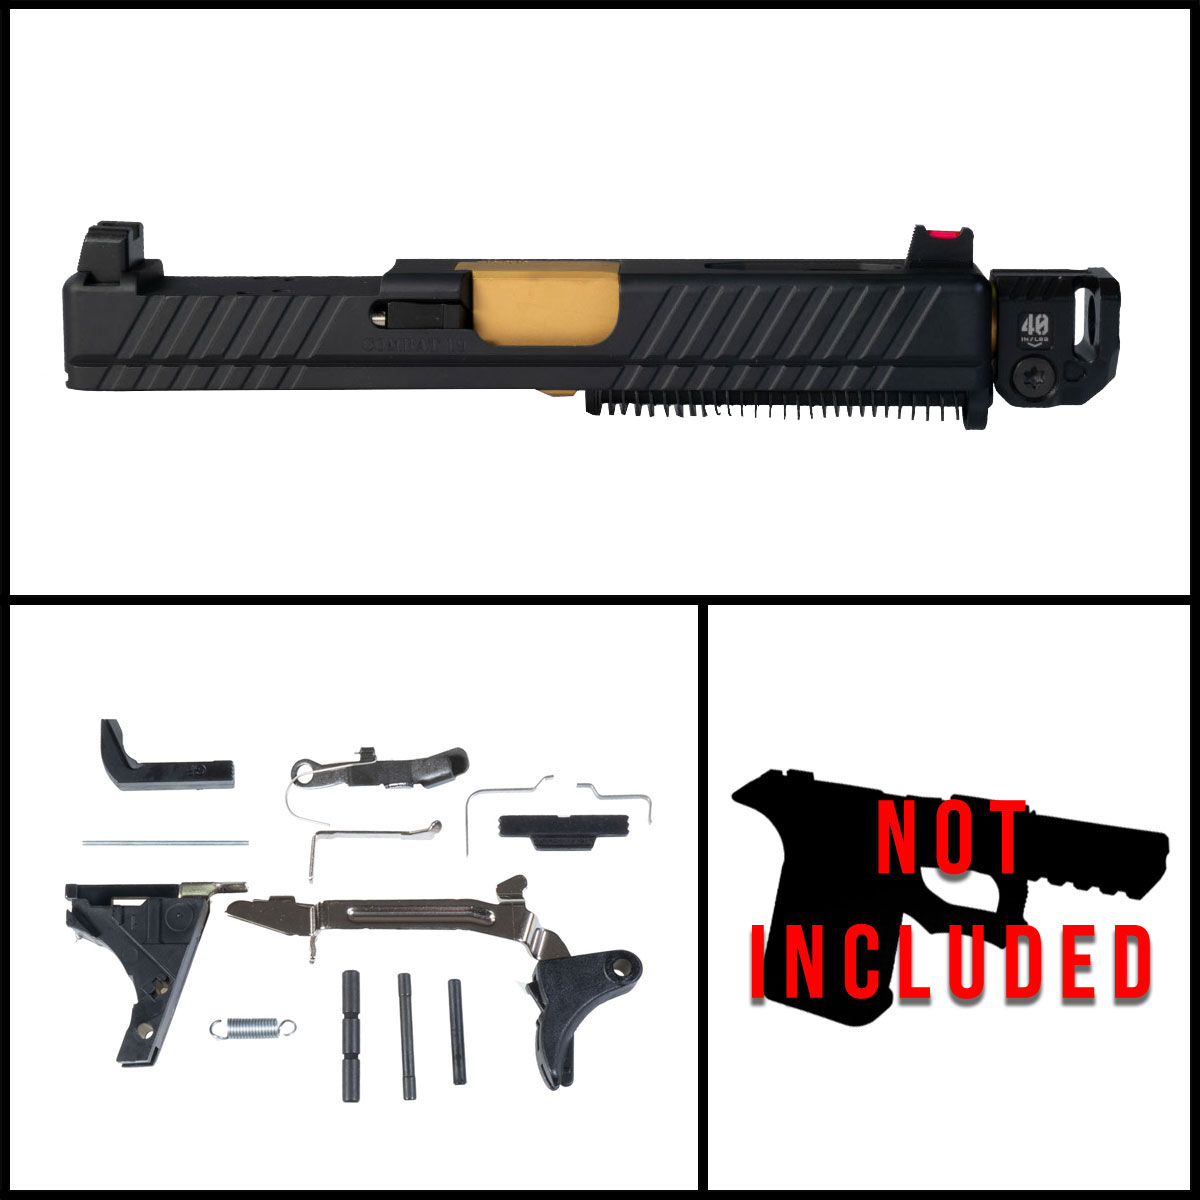 DDS 'Pugna w/ Strike Industries Compensator' 9mm Full Pistol Build Kit (Everything Minus Frame) - Glock 19 Gen 1-3 Compatible